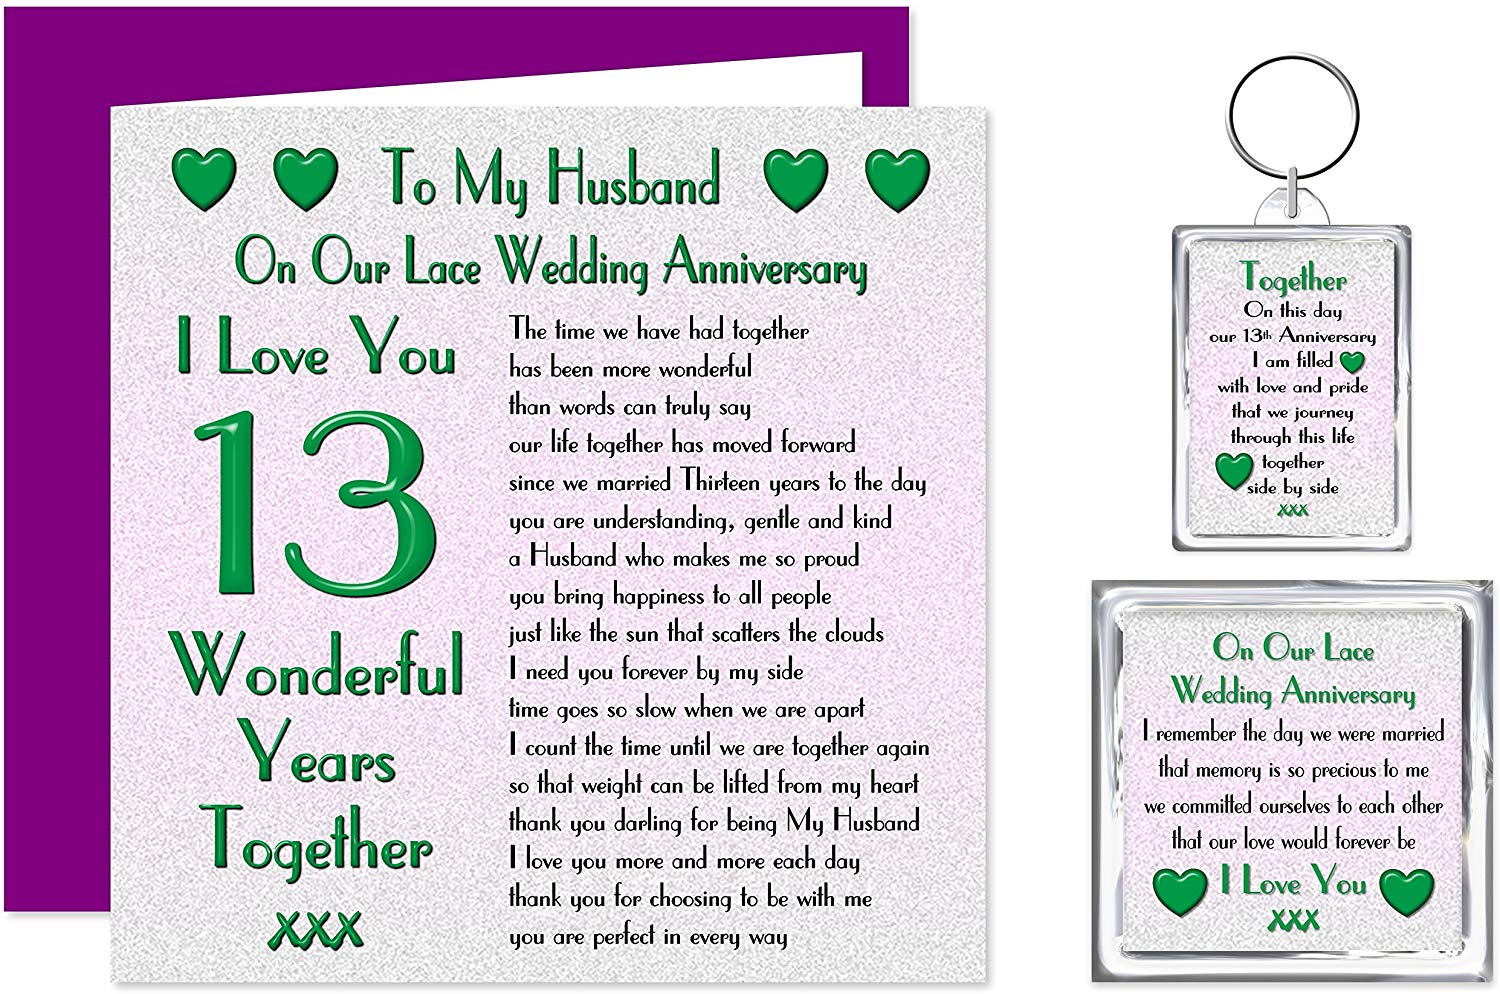 My Husband 13th wedding anniversary card - Card, Key ring & Fridge Magnet Present